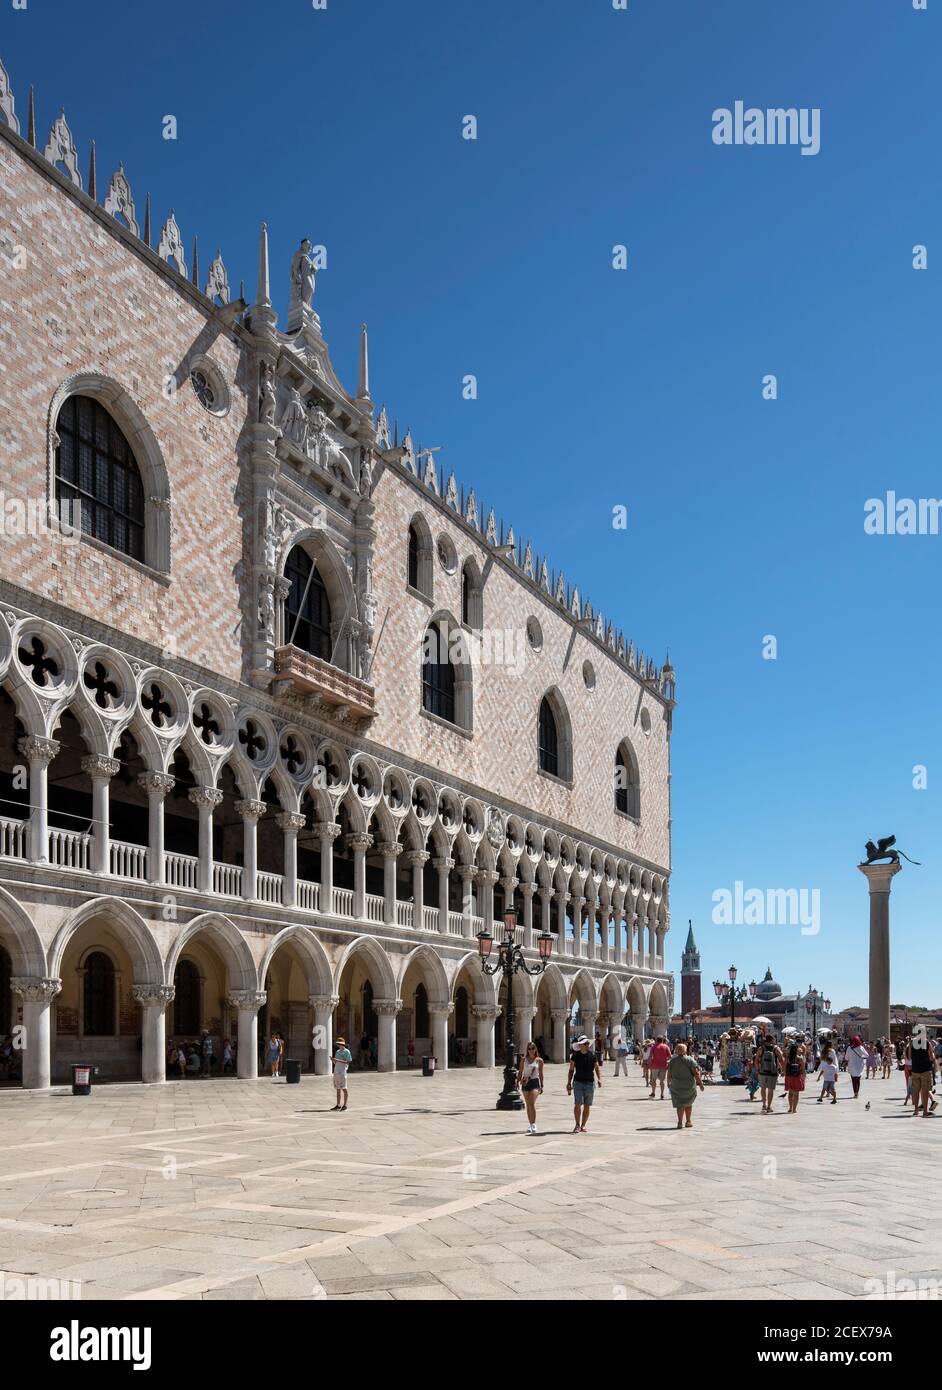 Venedig, Markusplatz (Piazzetta San Marco), Blick auf den Dogenpalast (Palazzo Ducale), Westfassade, rechts die Markussäule (Colonne di San Marco) Stock Photo